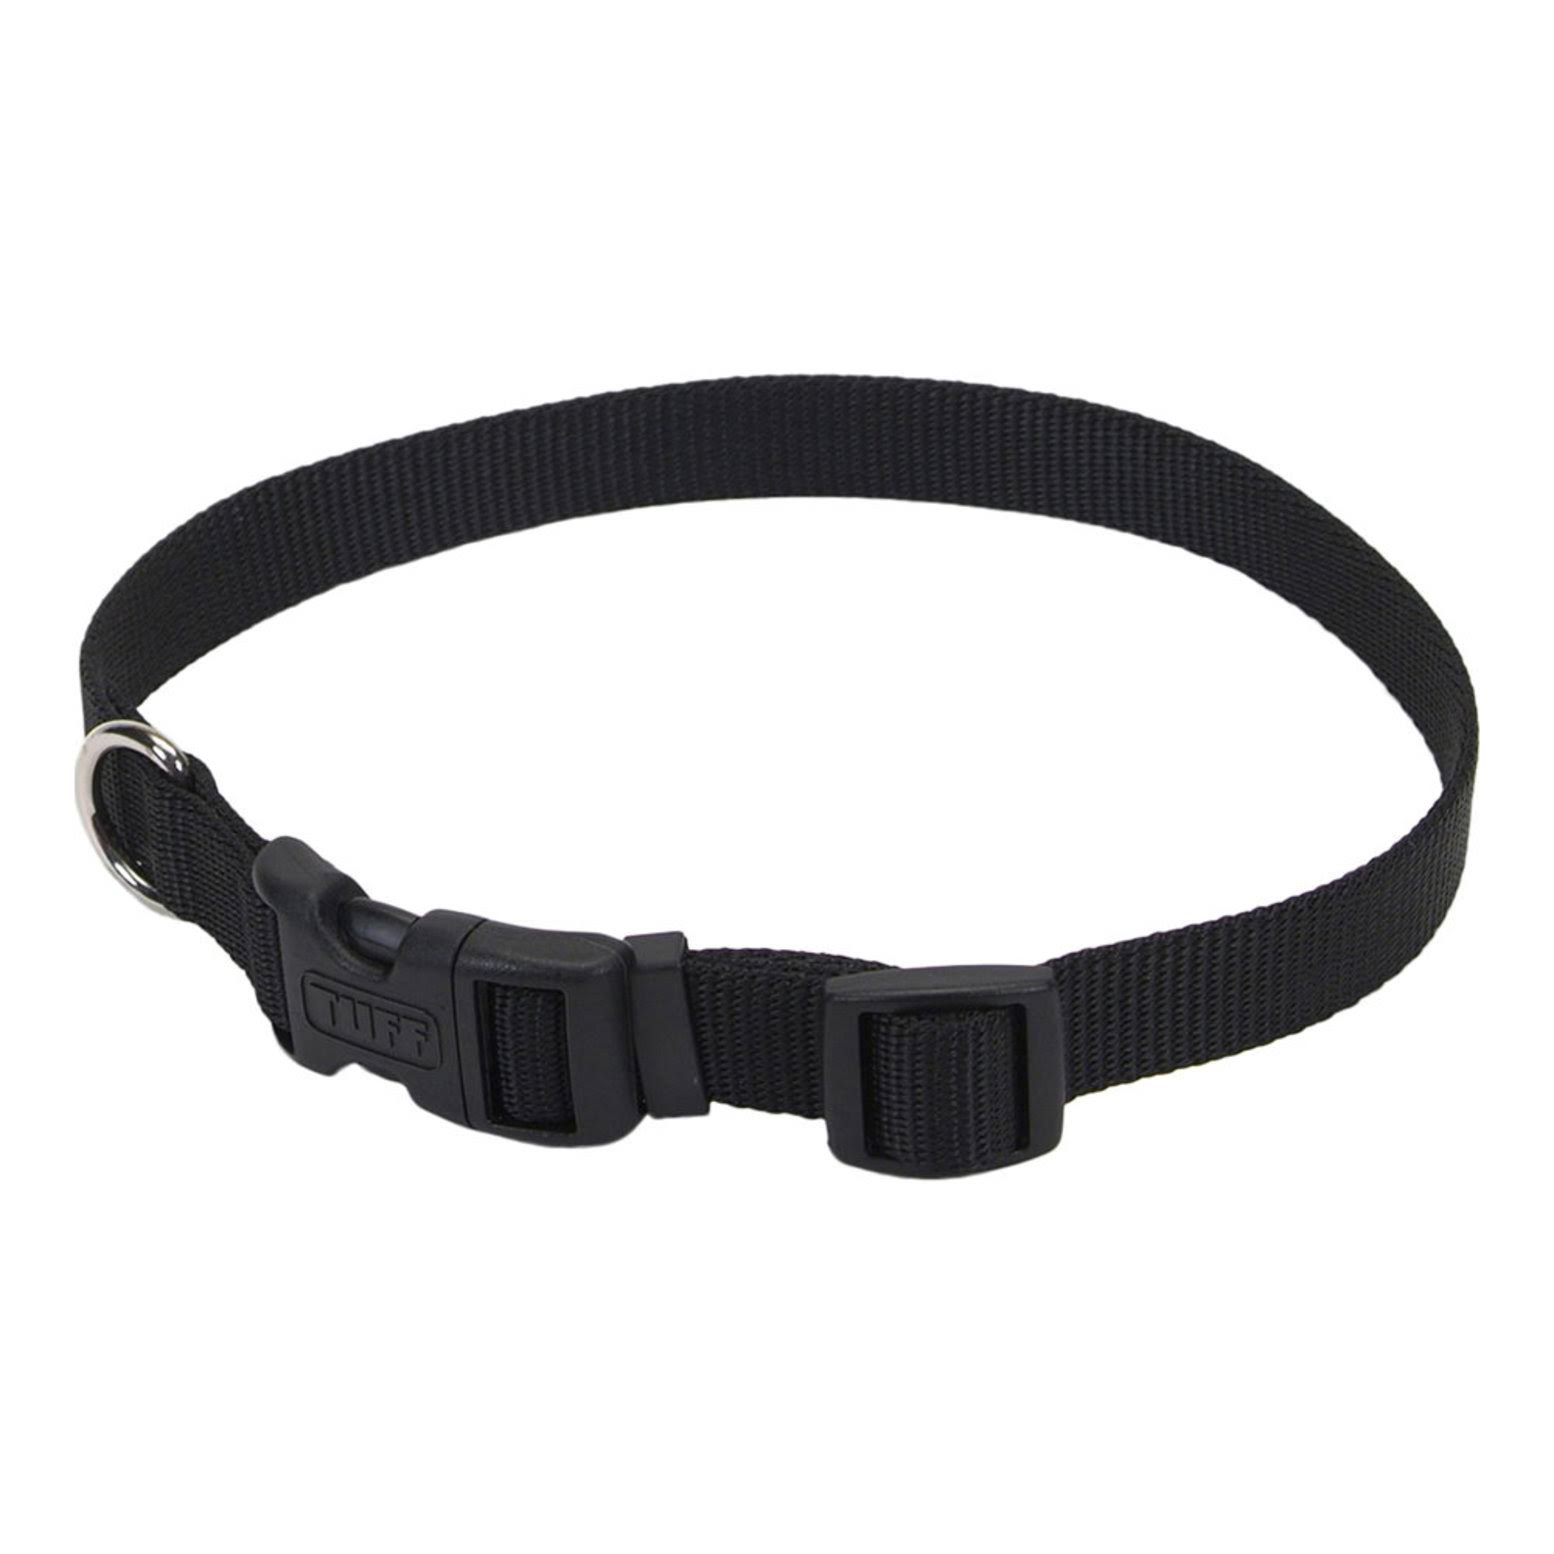 Coastal Pet Nylon Dog Collar - Black, Large, Adjustable